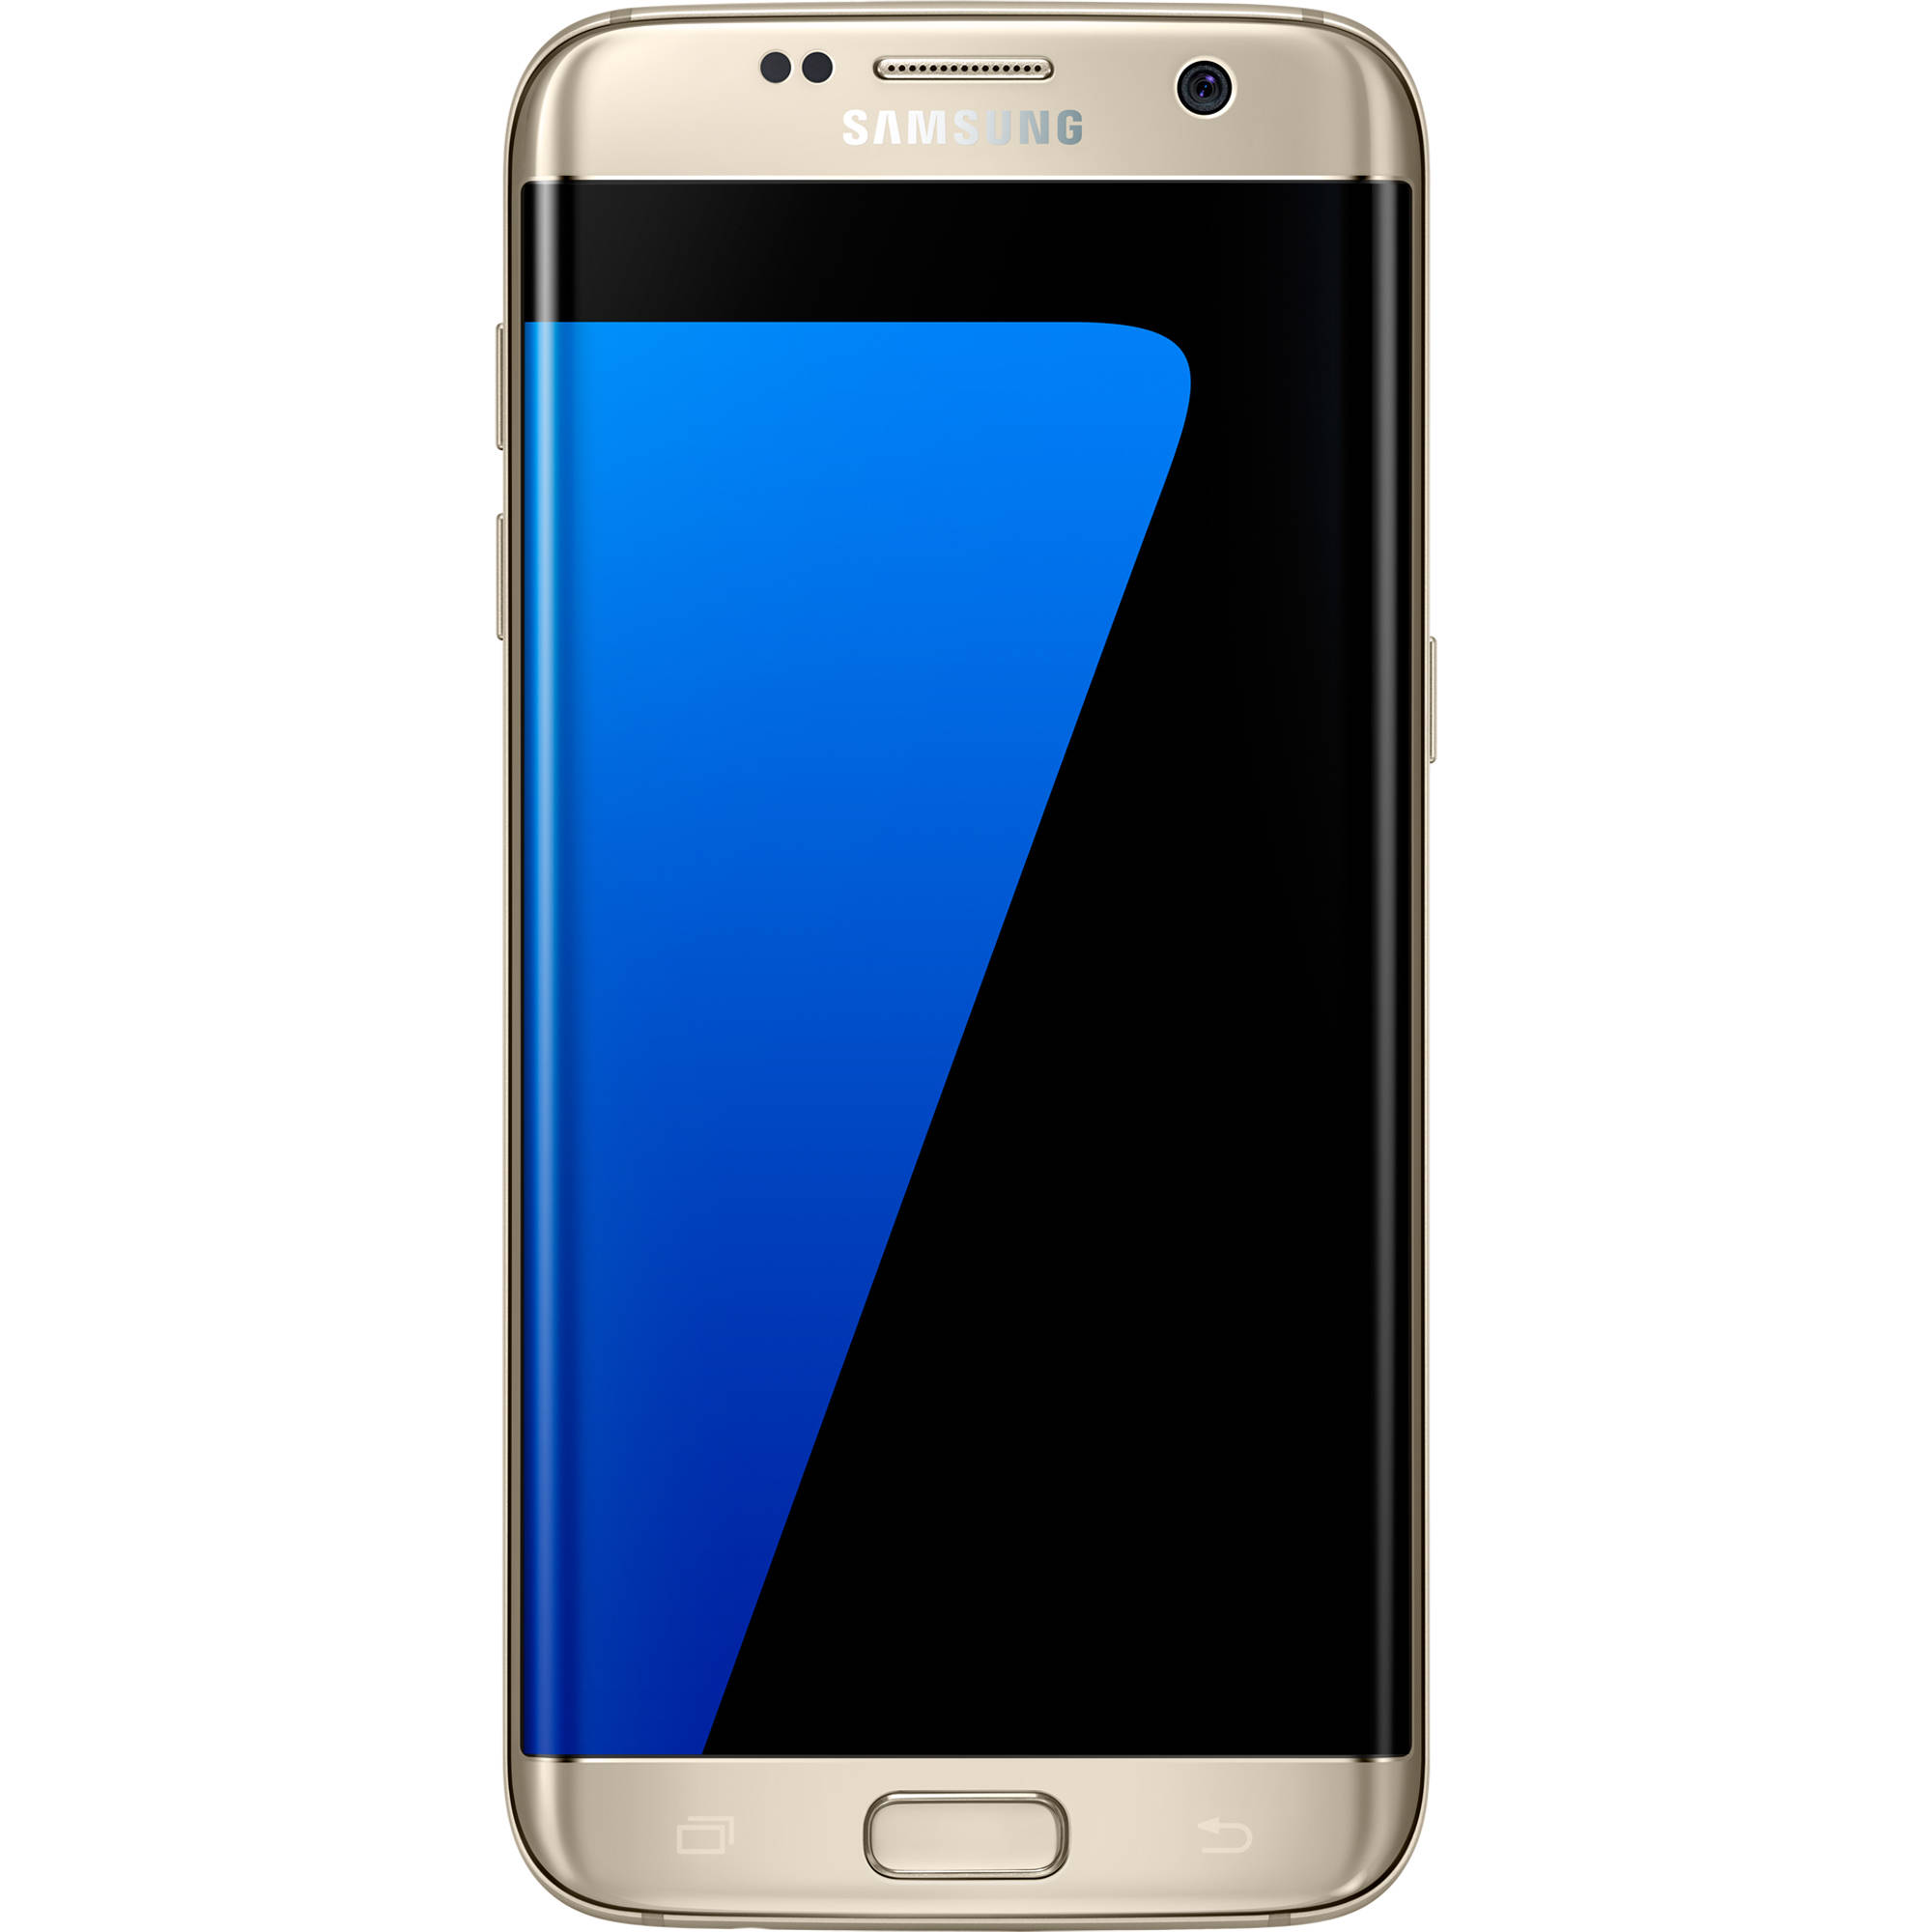 SAMSUNG GALAXY S7 EDGE 32GB - G935F - Back2buzz - Premium iPhones